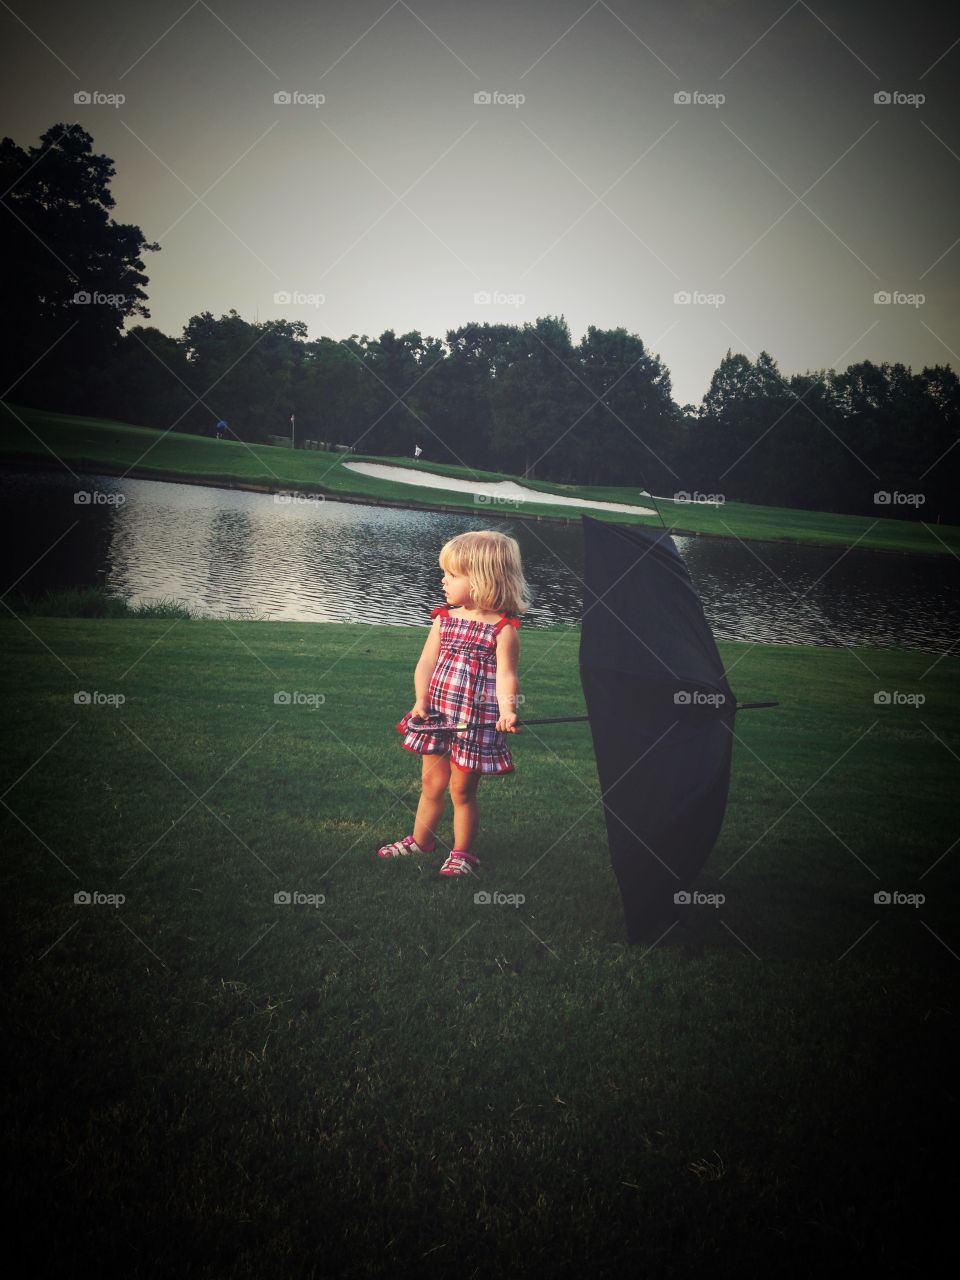 Umbrella girl . Waiting for fireworks in the rain 